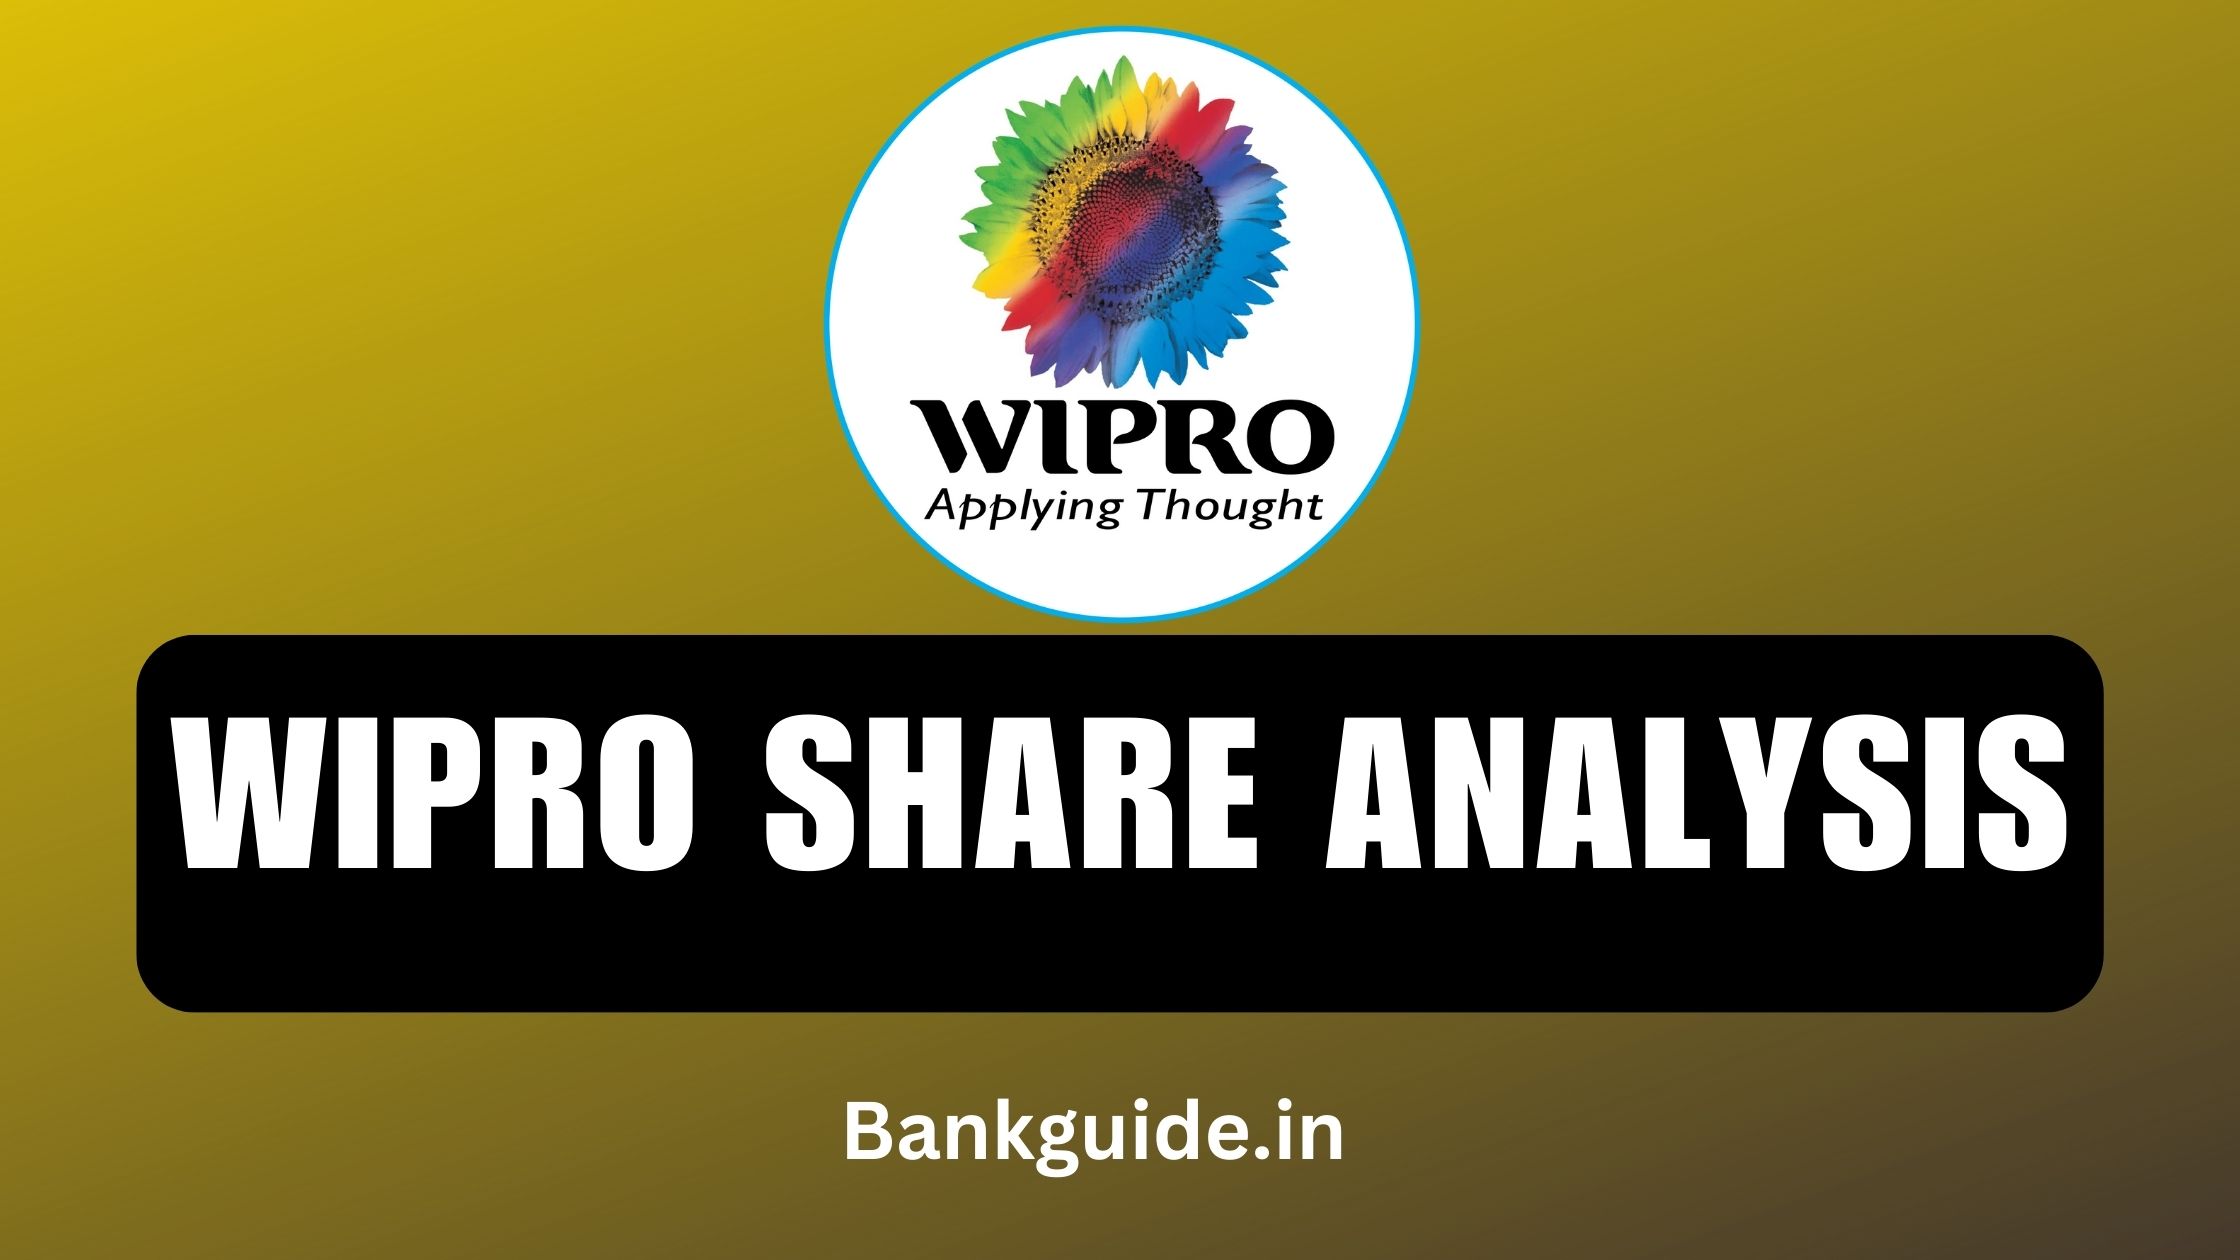 Wipro Share Analysis - FUndamental and Technical Analysis